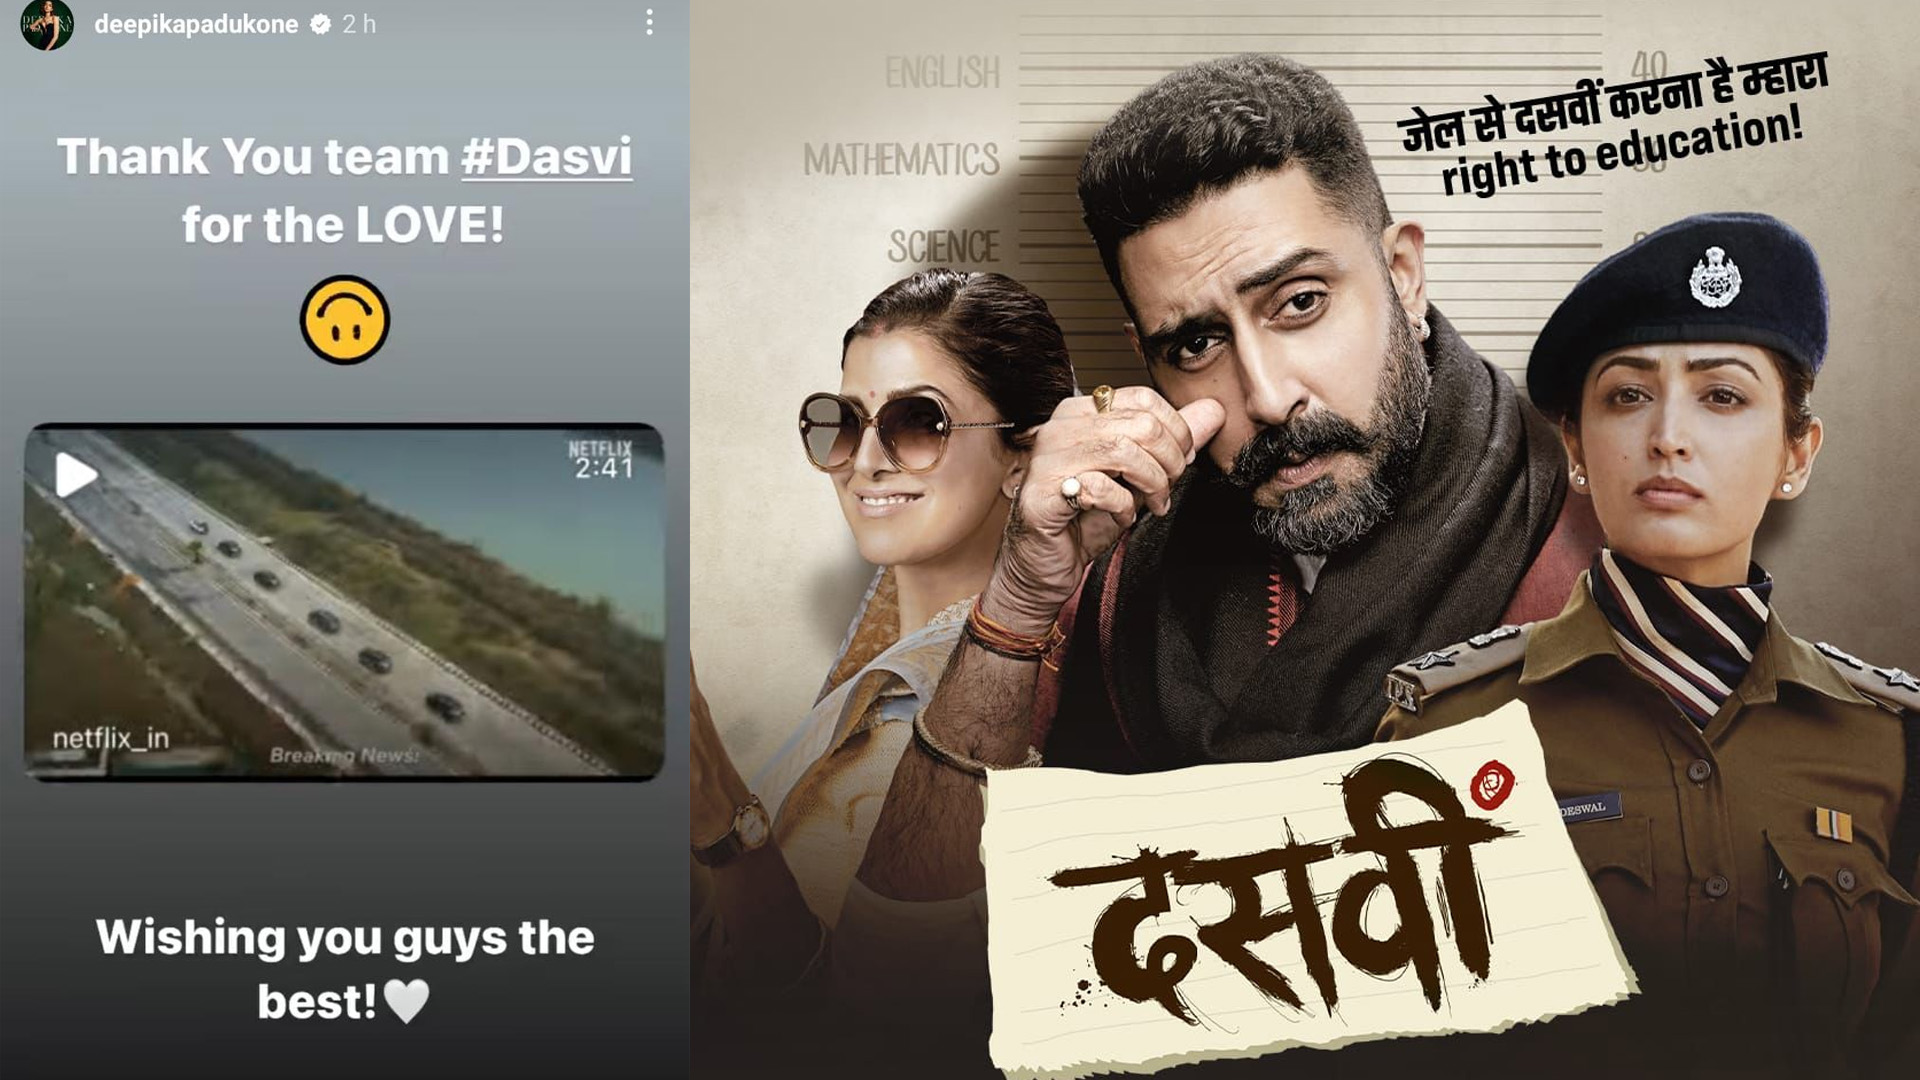 Deepika Padukone reacts to Abhishek Bachchan’s, “Everyone Loves Deepika” comment in Dasvi trailer!